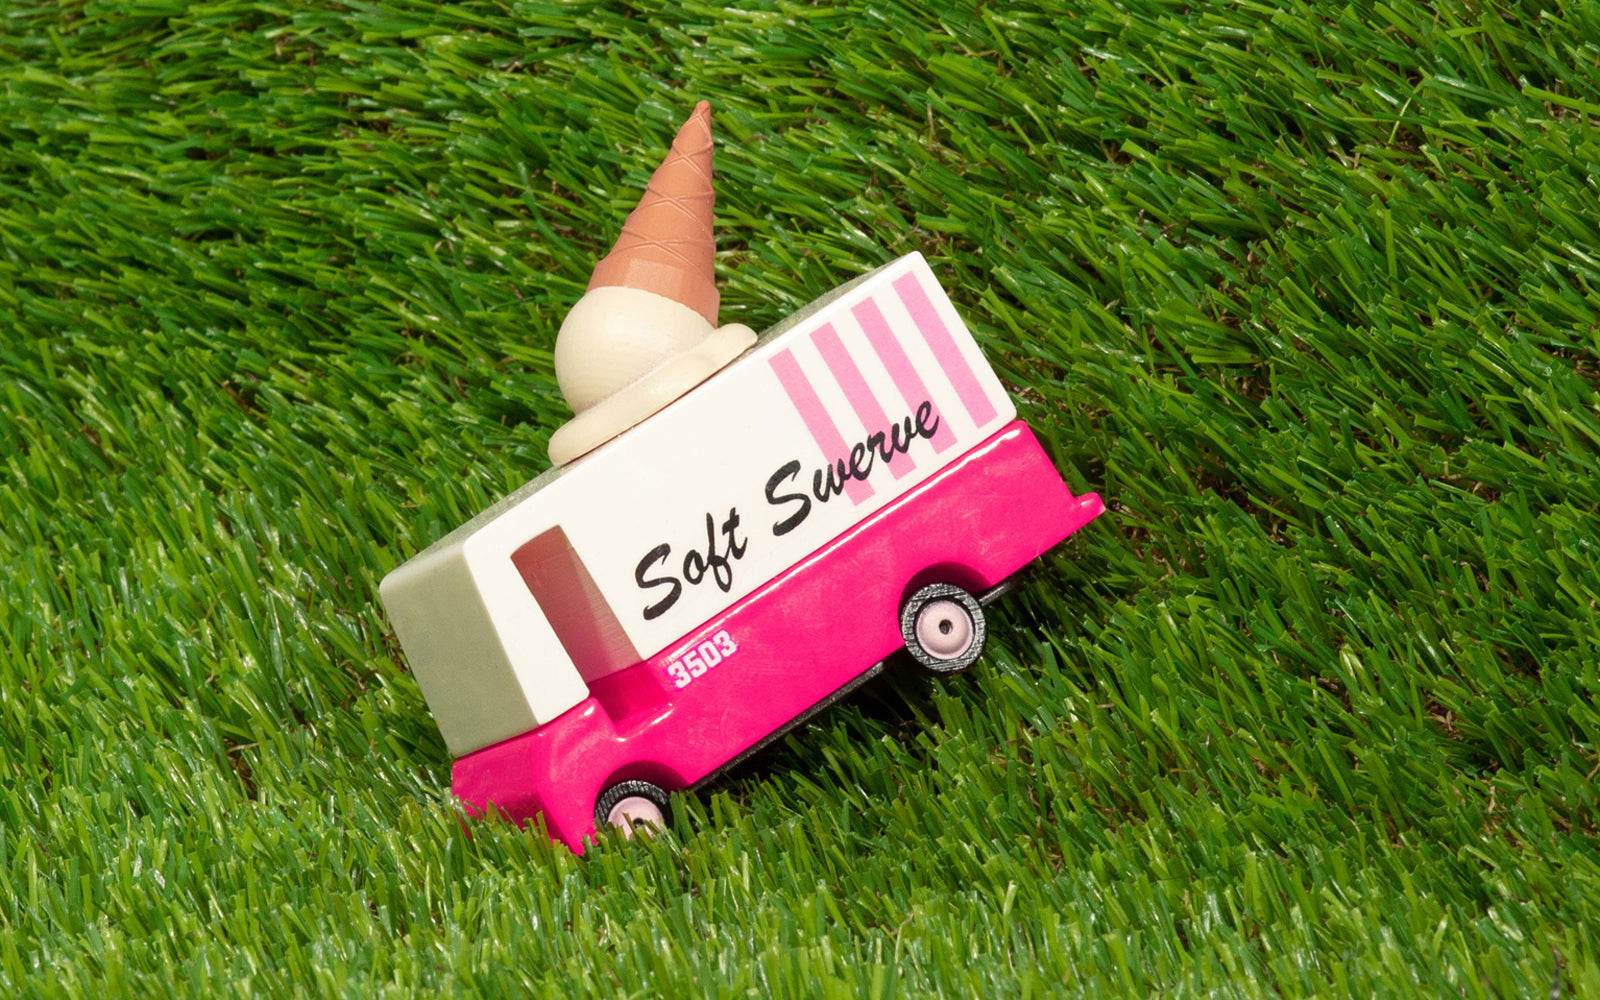 Ice Cream Truck CandyCar - Candylab